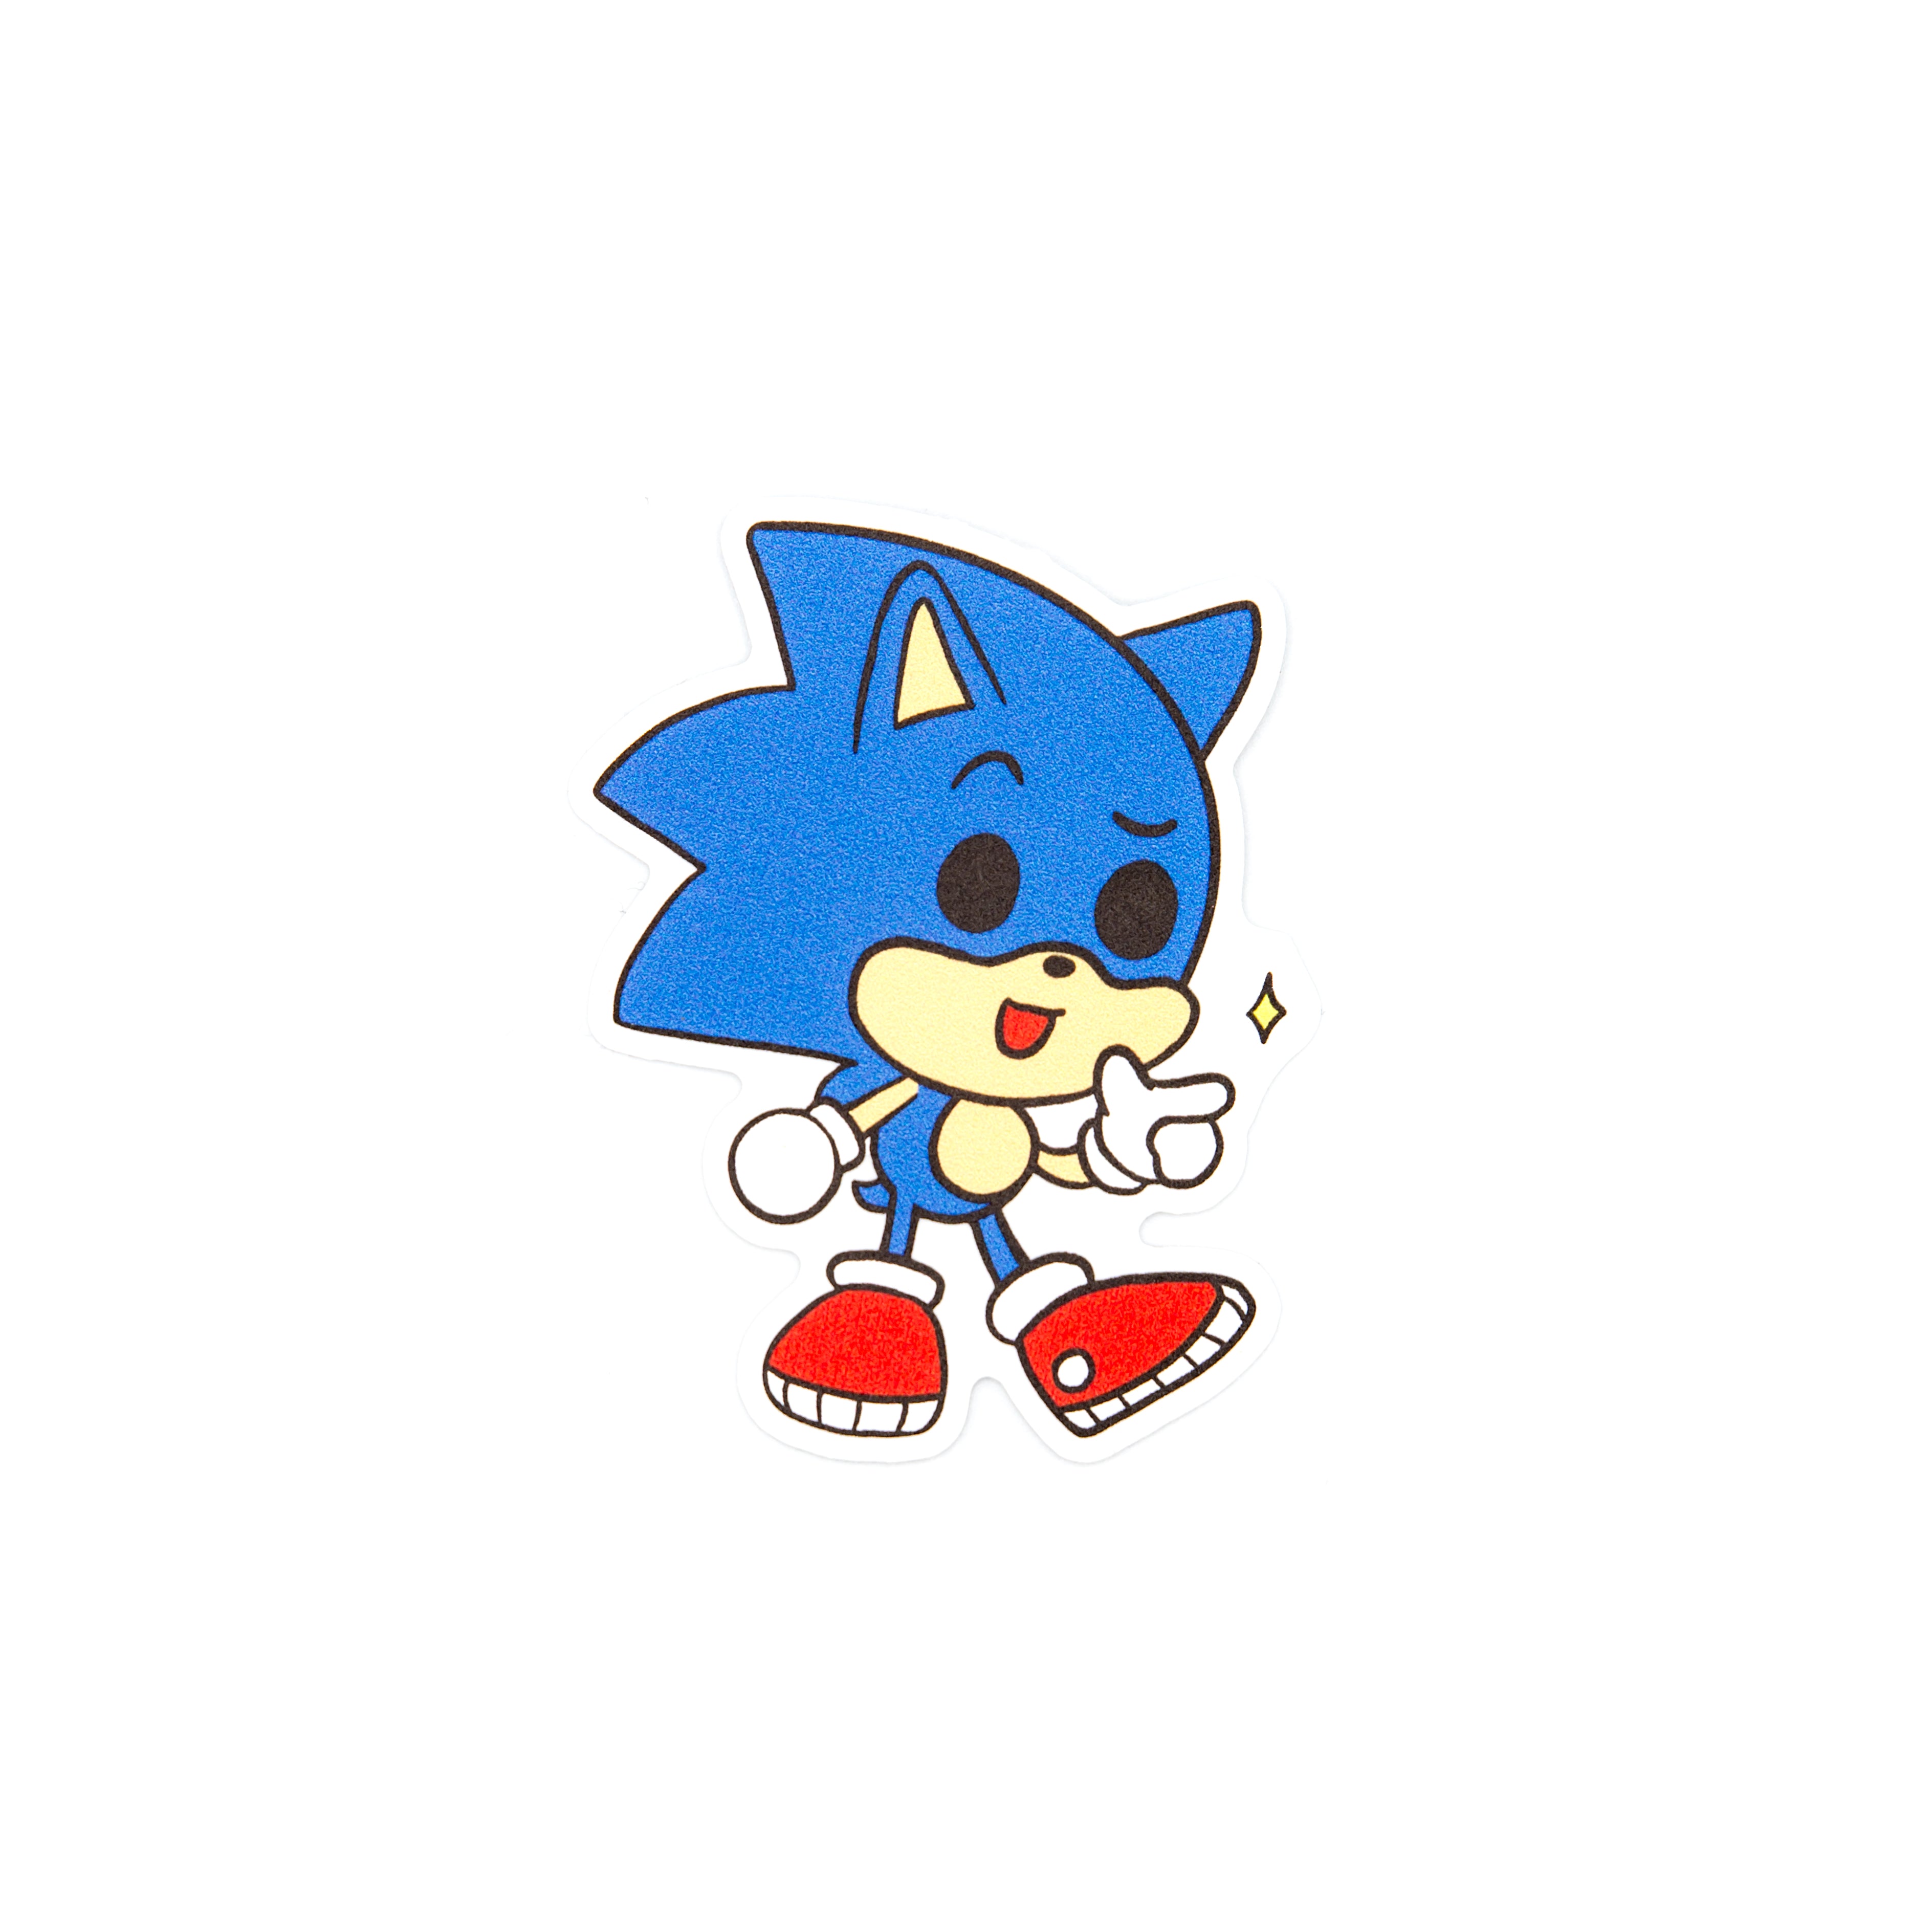 Smol Sonic Sticker